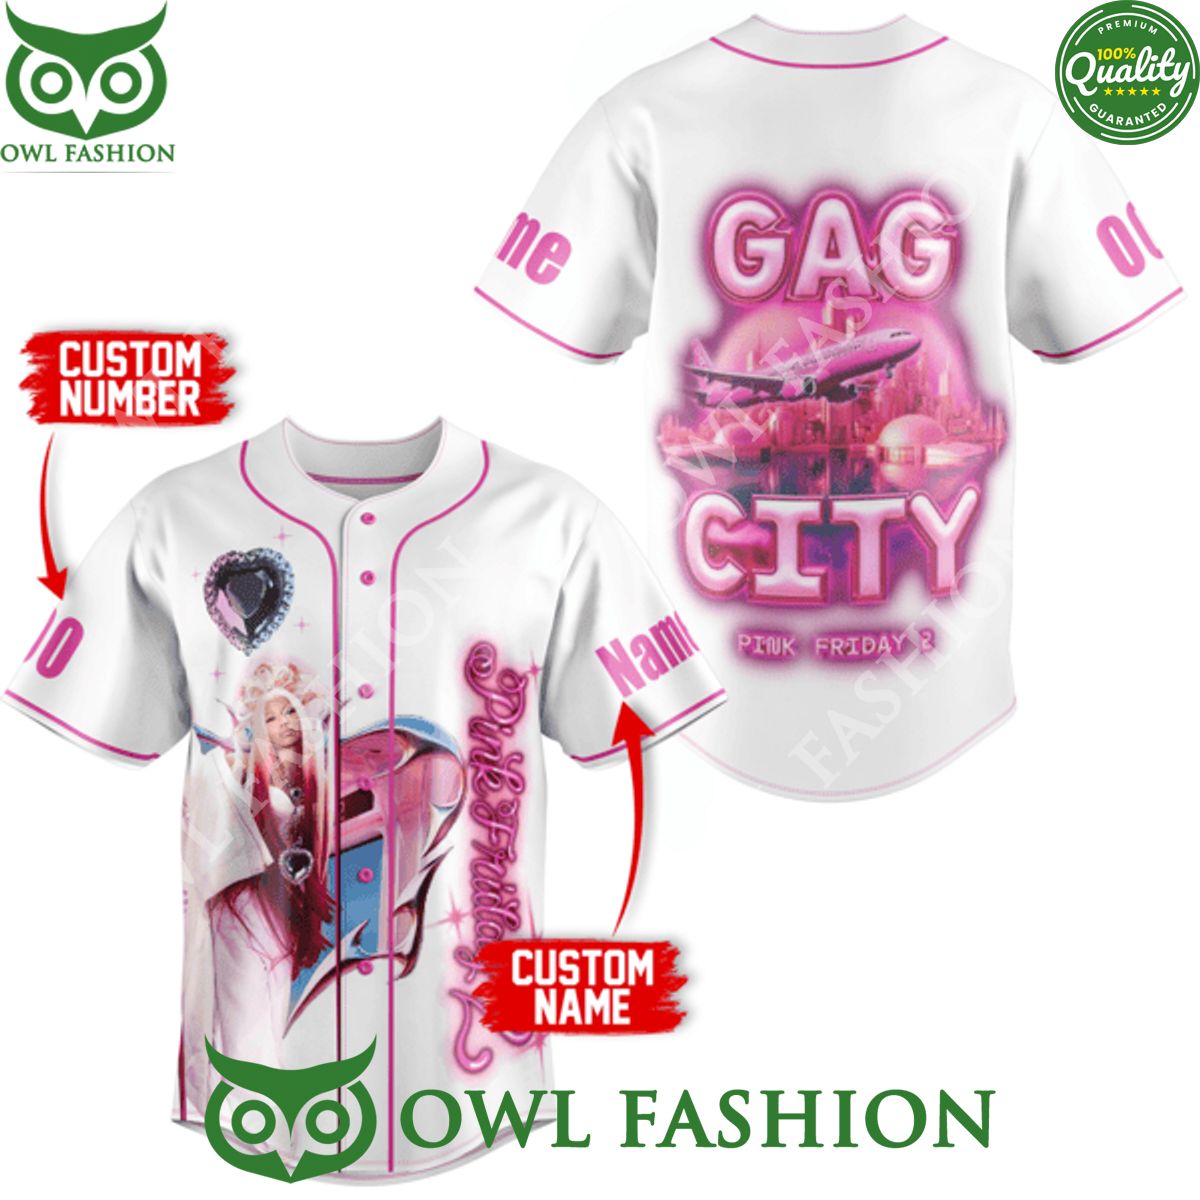 GAG City Pink Friday 2 Nicki Minaj custom name and number baseball jersey shirt